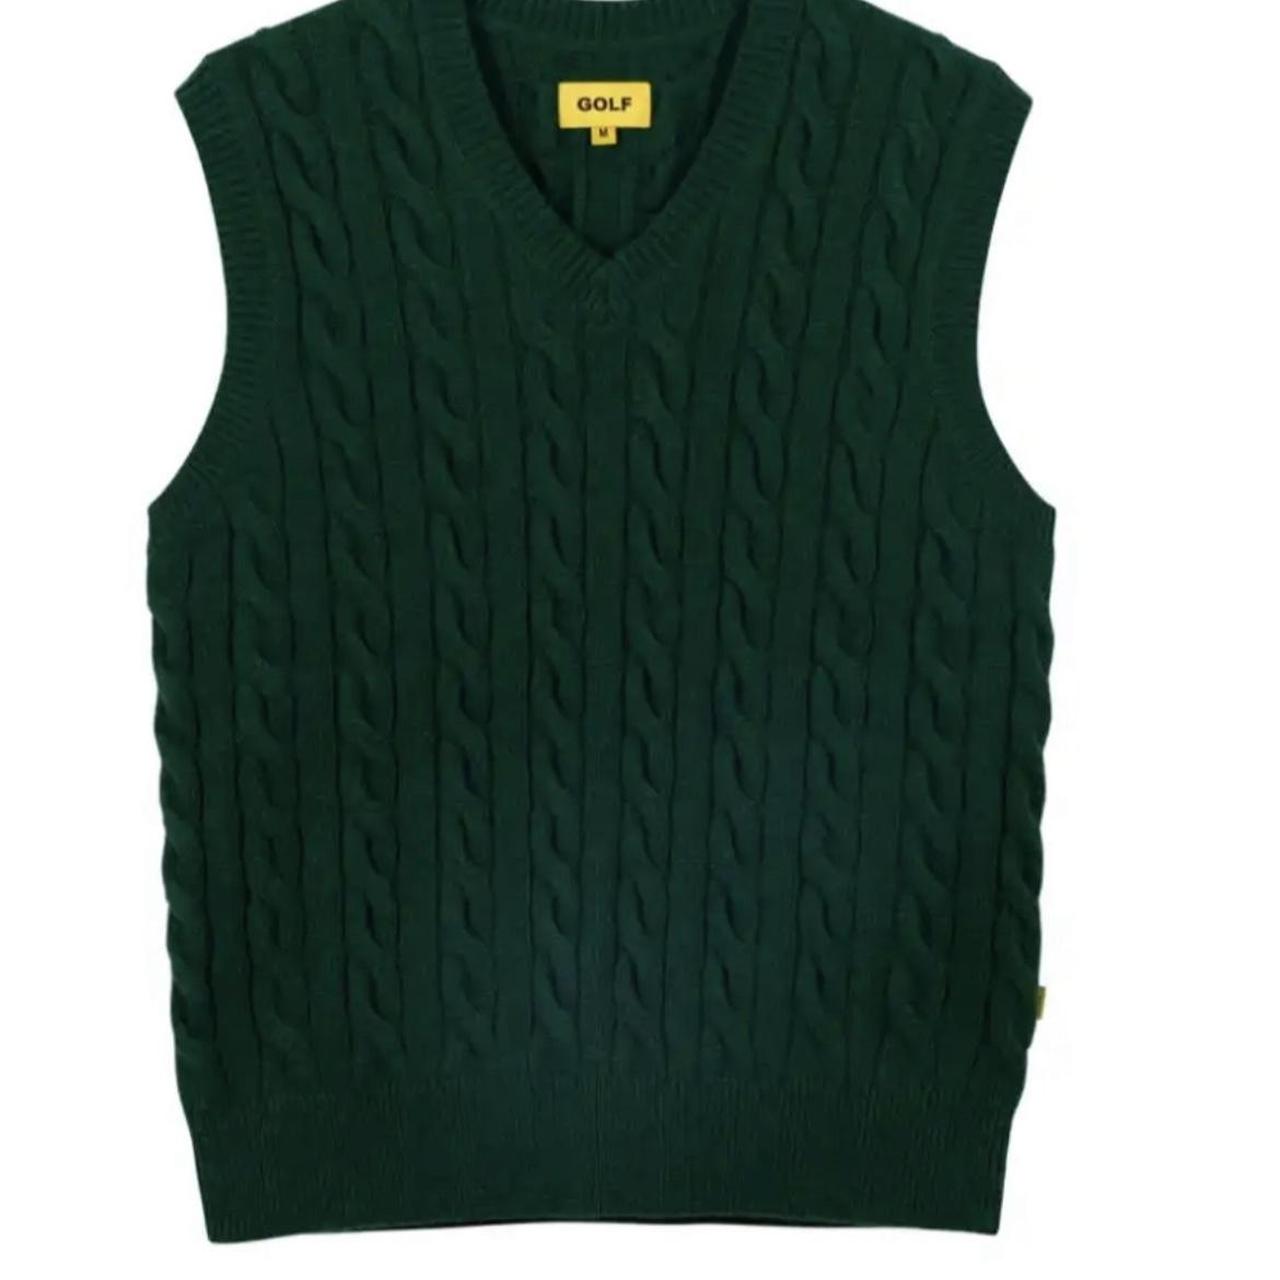 Golf Wang Cable Knit G Sweater Vest Green... - Depop